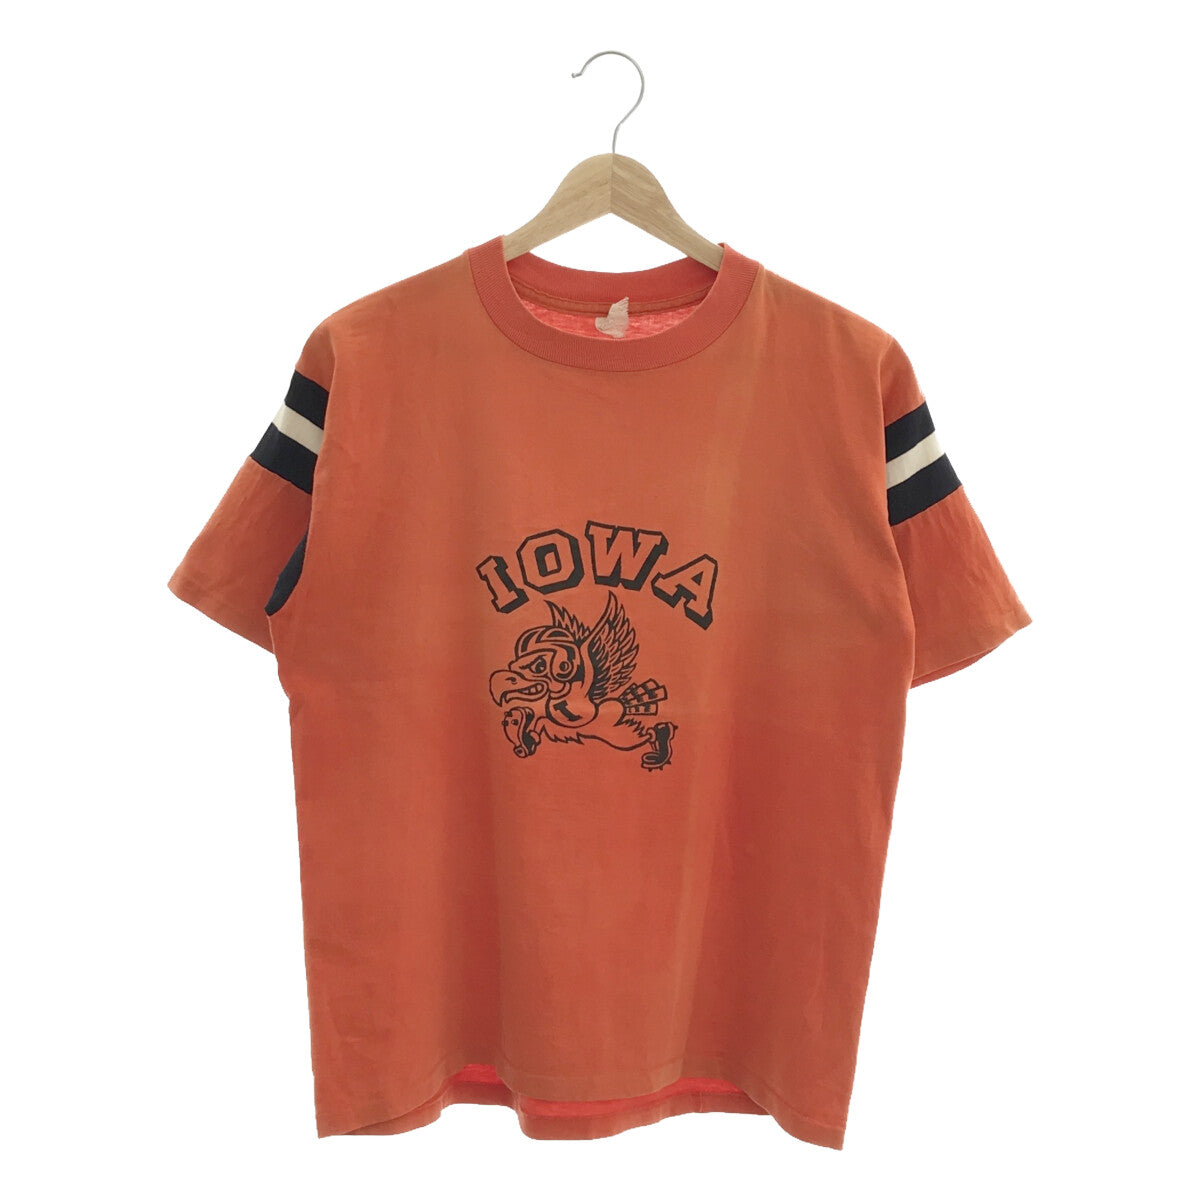 VINTAGE / ヴィンテージ古着 | 80s〜 Collegiate Pacific 袖切替 IOWA プリント Tシャツ | M |